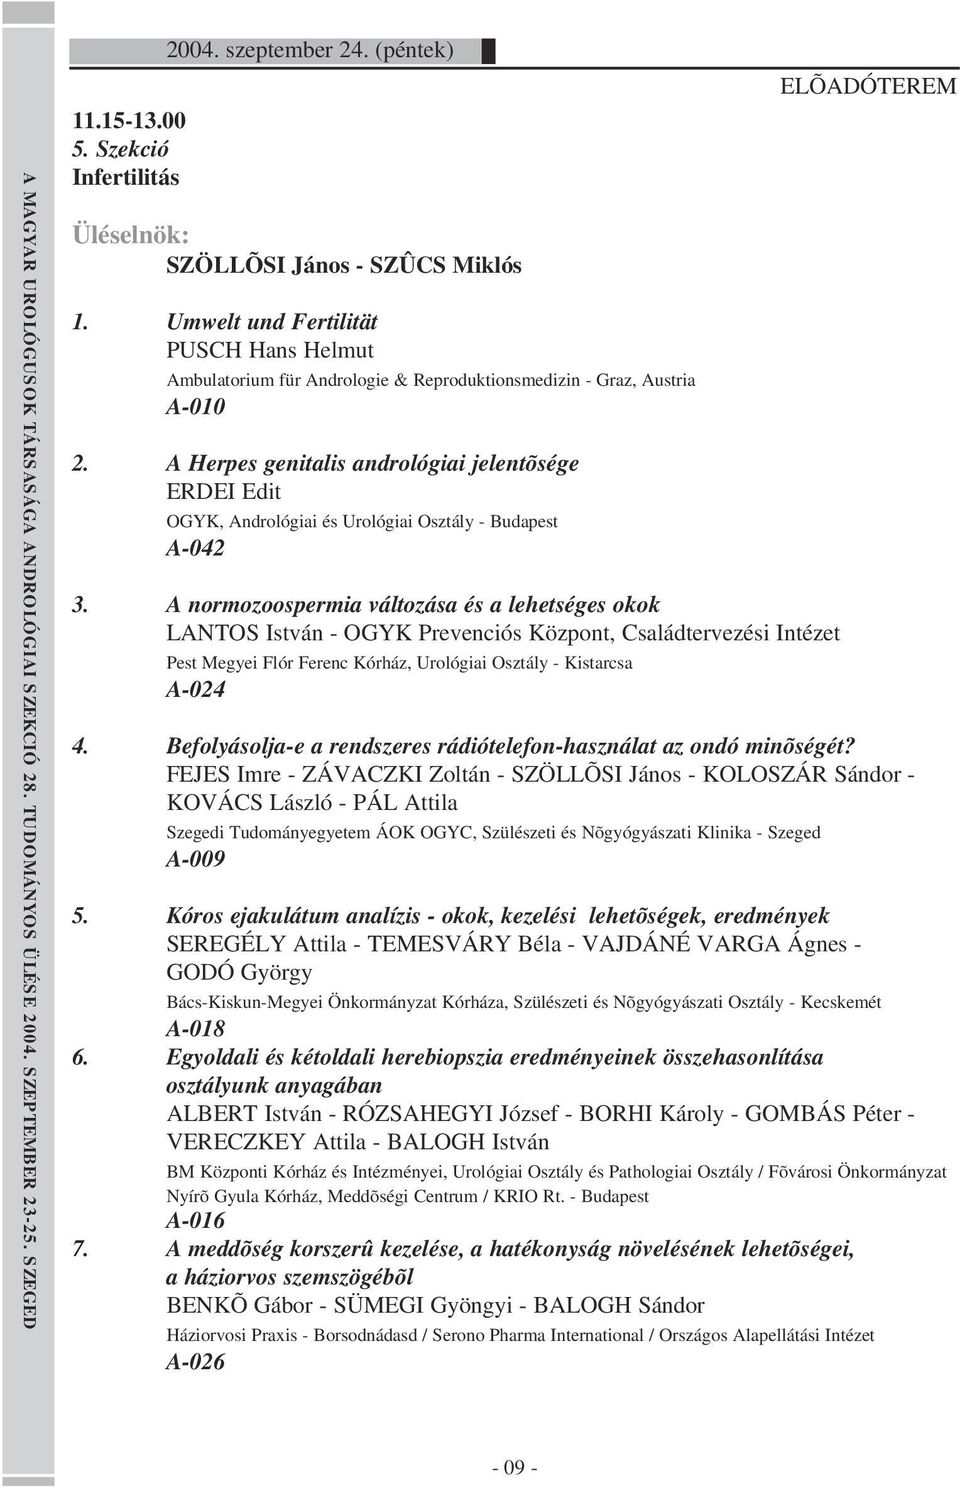 A Herpes genitalis andrológiai jelentõsége ERDEI Edit OGYK, Andrológiai és Urológiai Osztály - Budapest A-042 3.